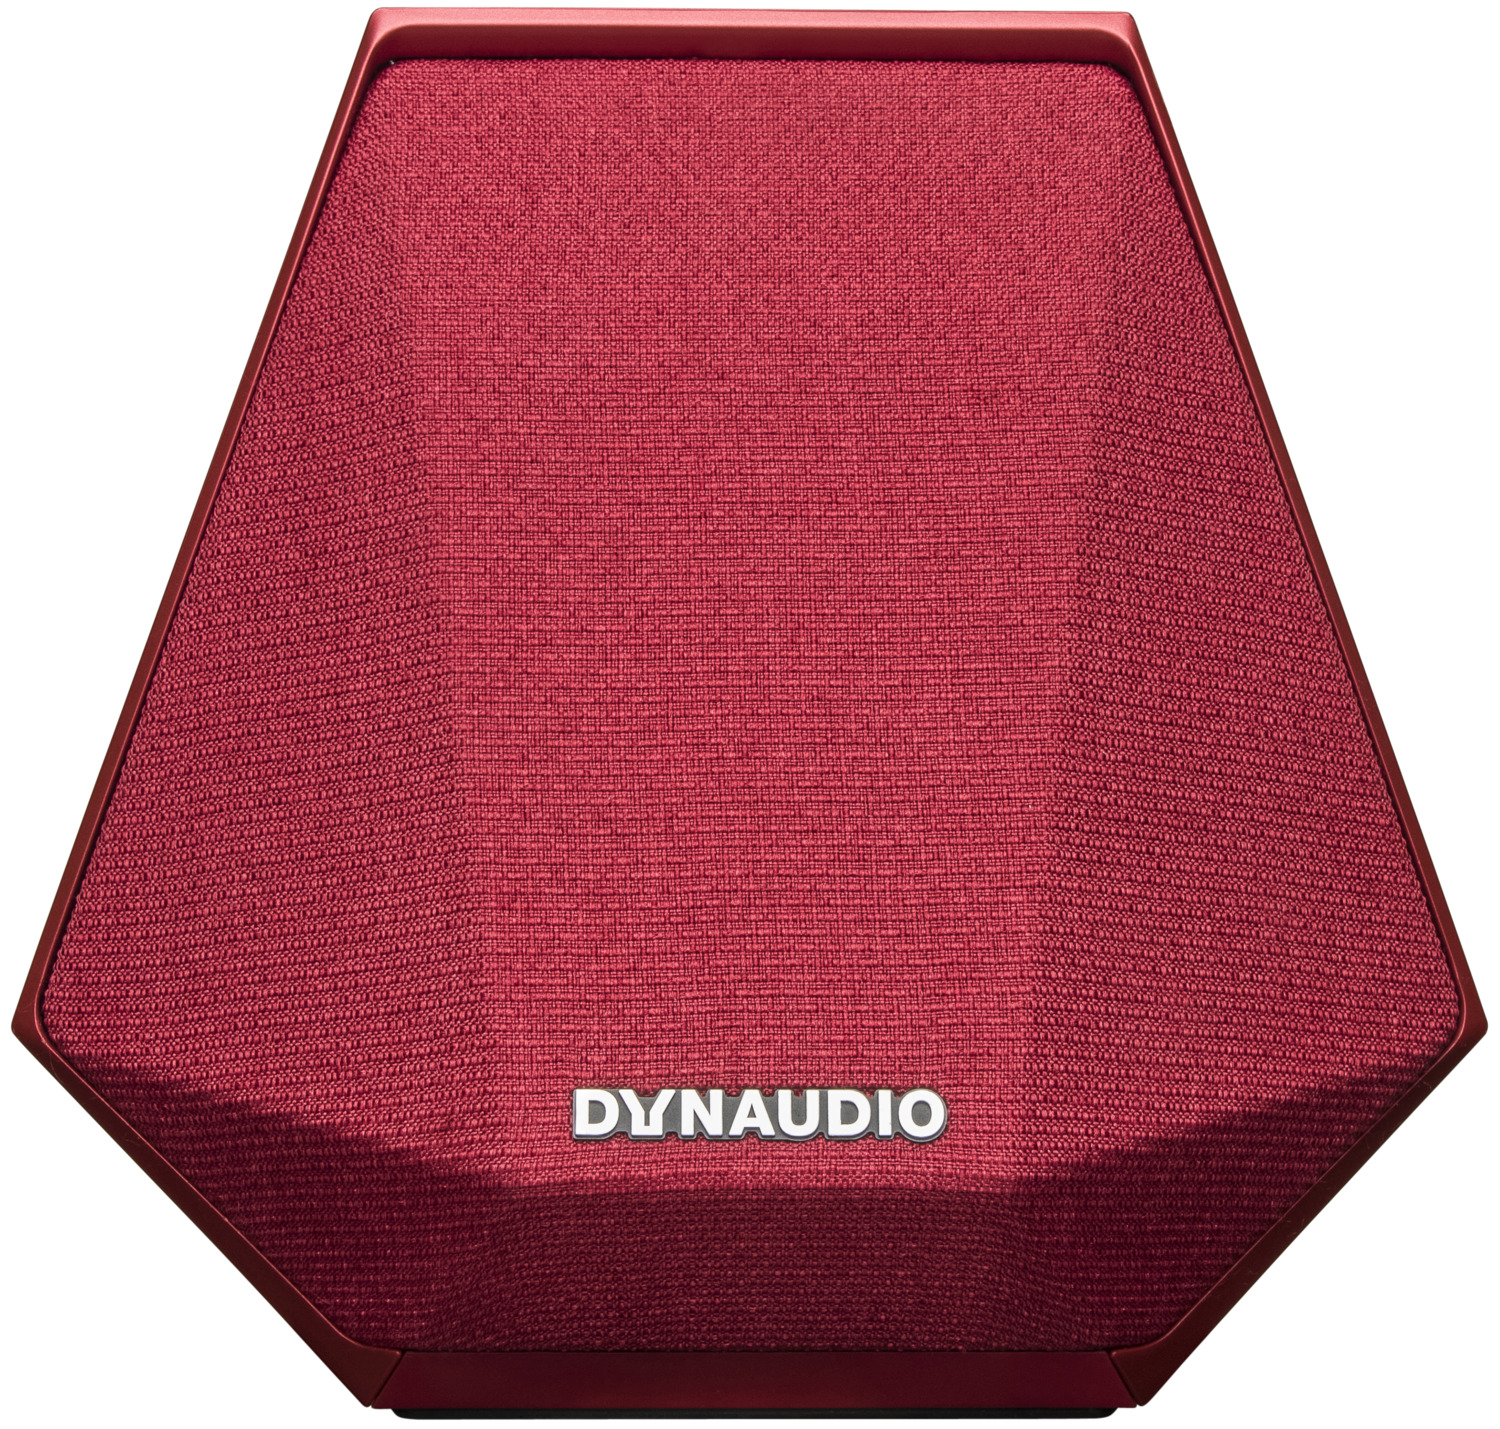 Dynaudio Music 1 red